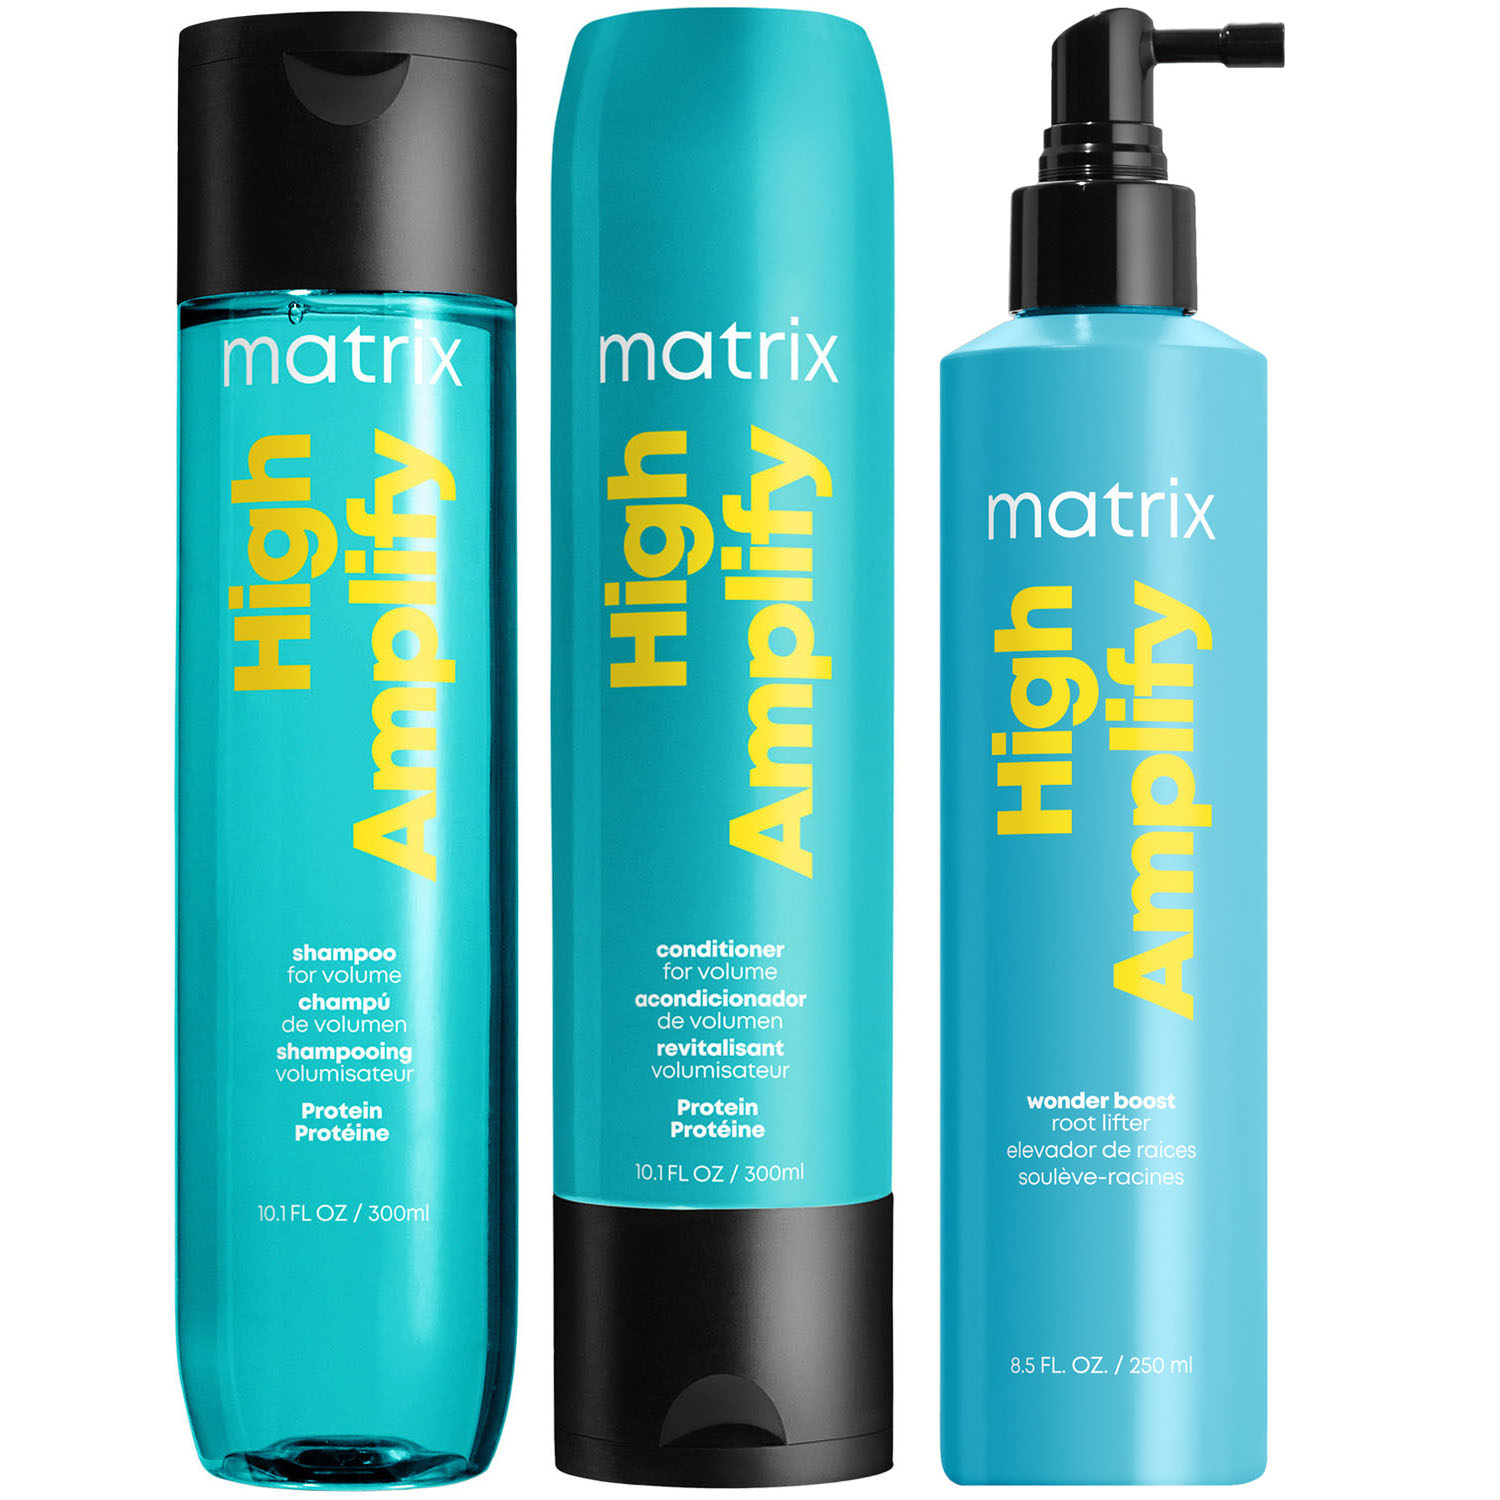 Matrix Набор для объема волос: шампунь 300 мл + кондиционер 300 мл + спрей 250 мл (Matrix, Total results) набор для экстраобъема волос matrix matrix total results high amplify winter bom 2 мл